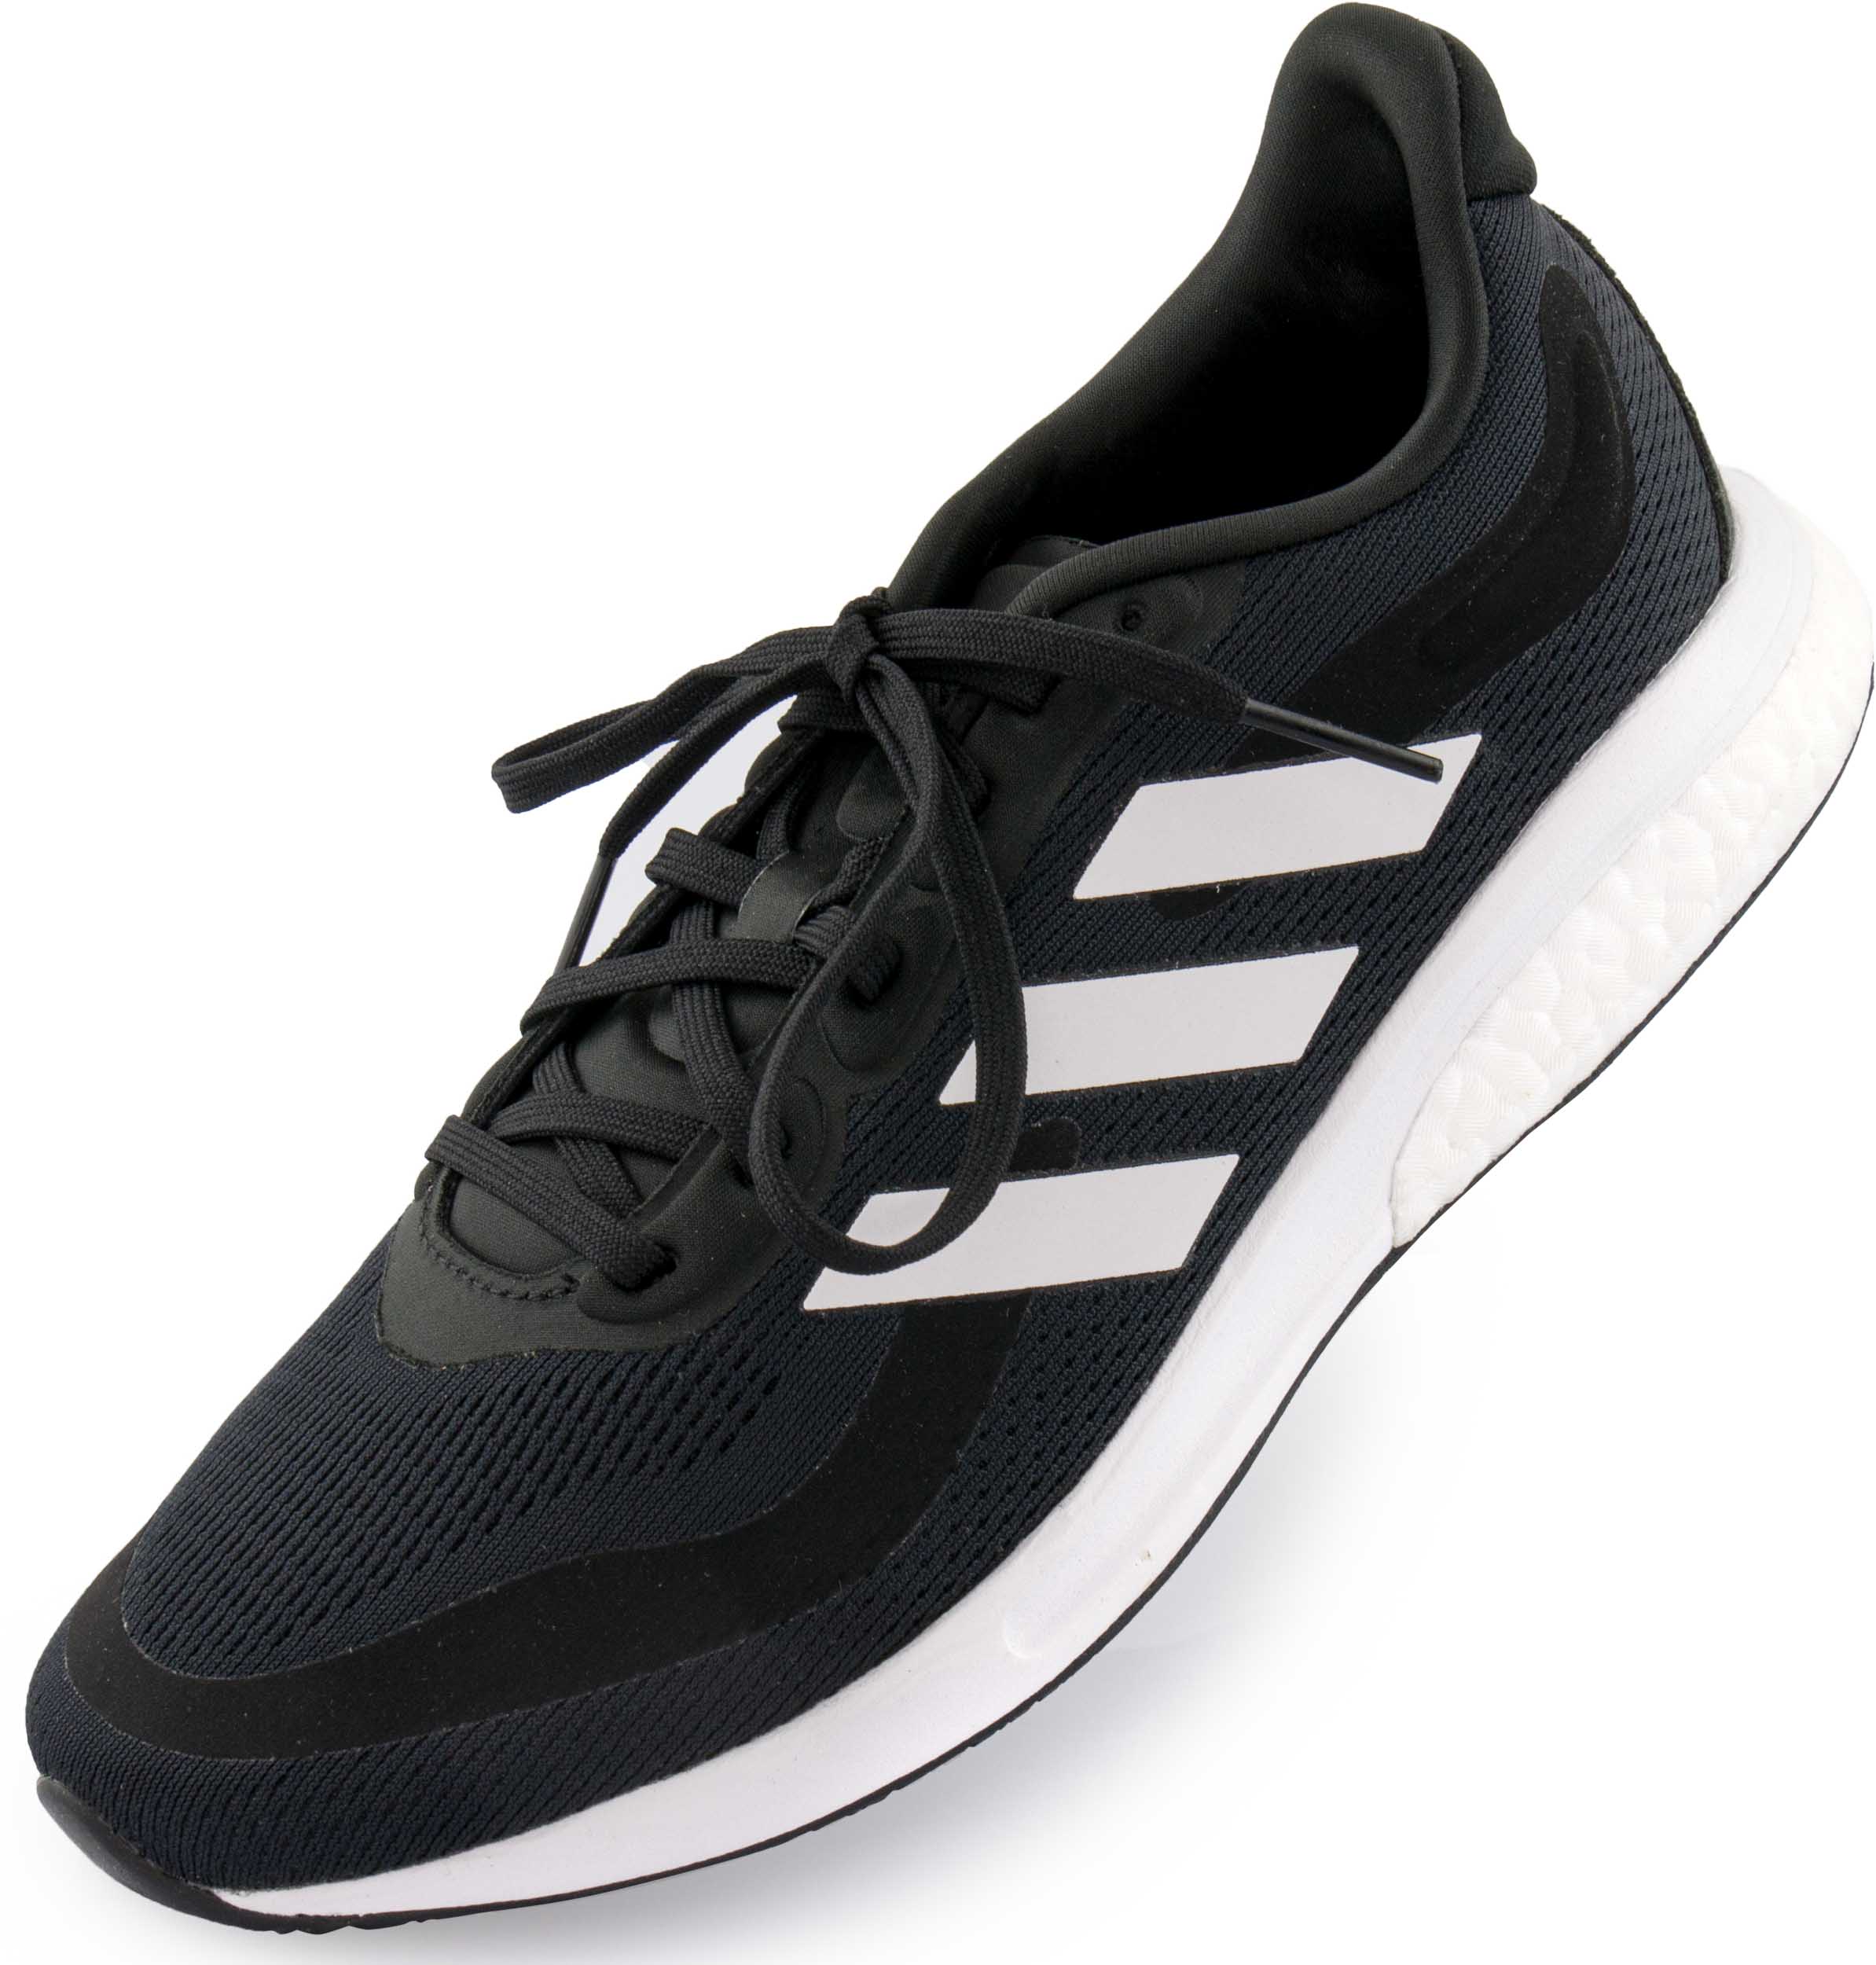 Dámské běžecké boty Adidas Wms Supernova Black/White|36 2/3